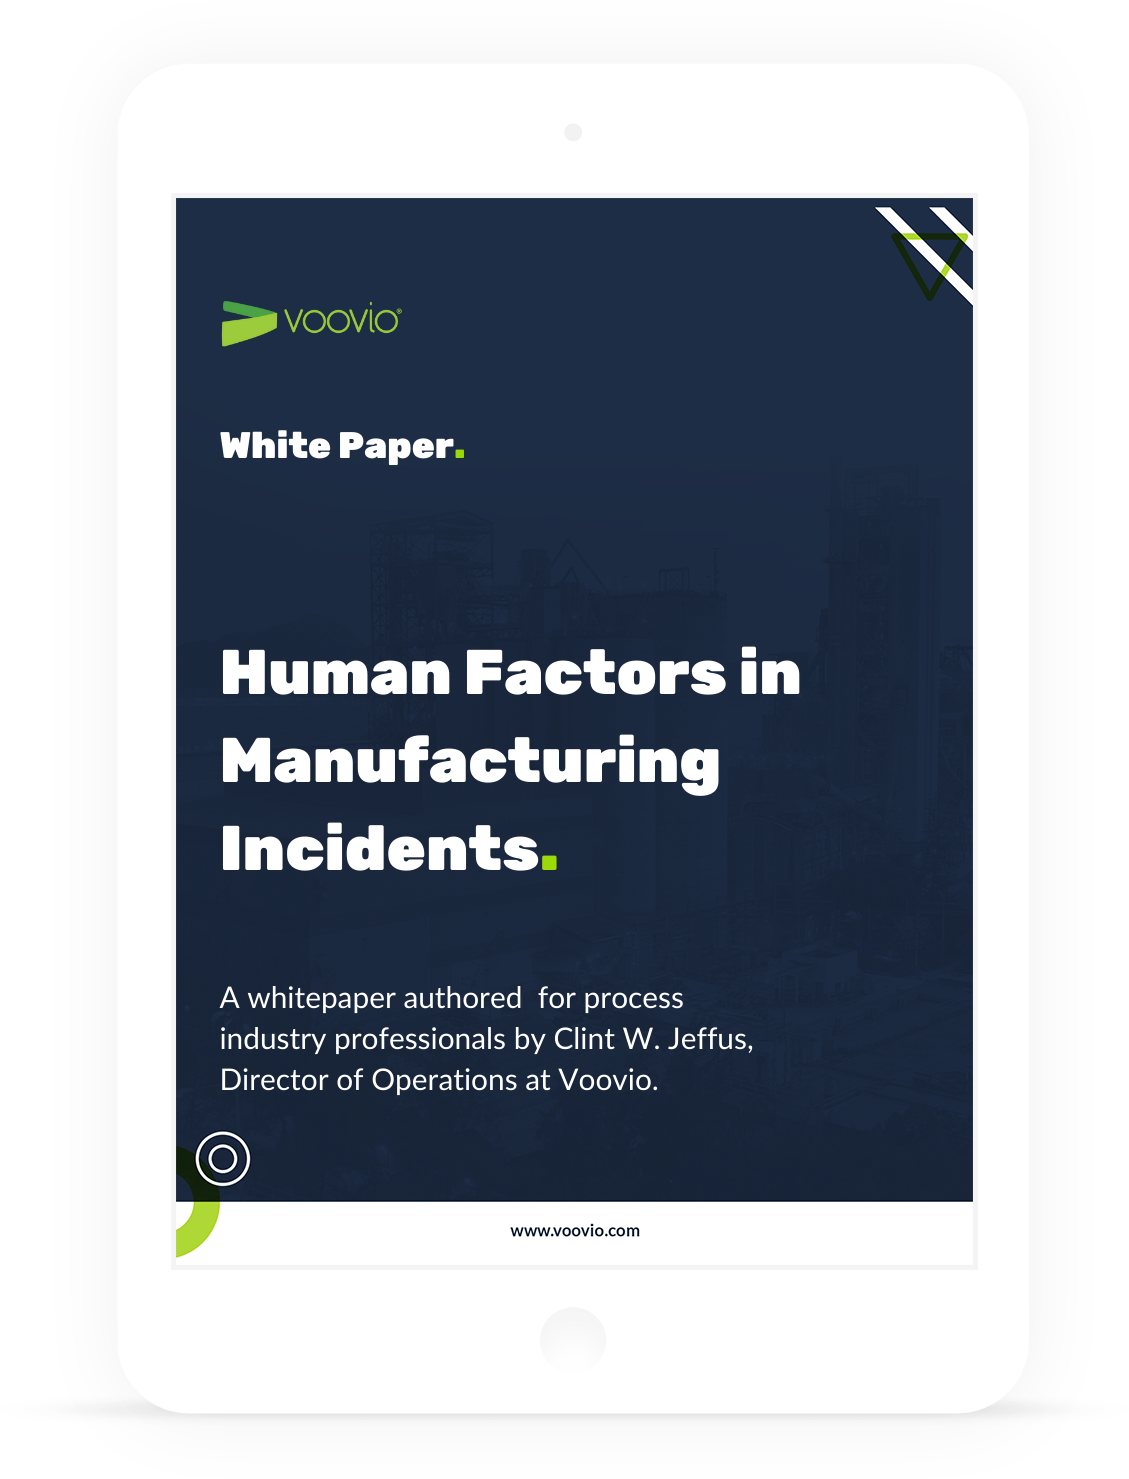 Voovio Whitepaper Human Factors in Manufacturing Incidents.